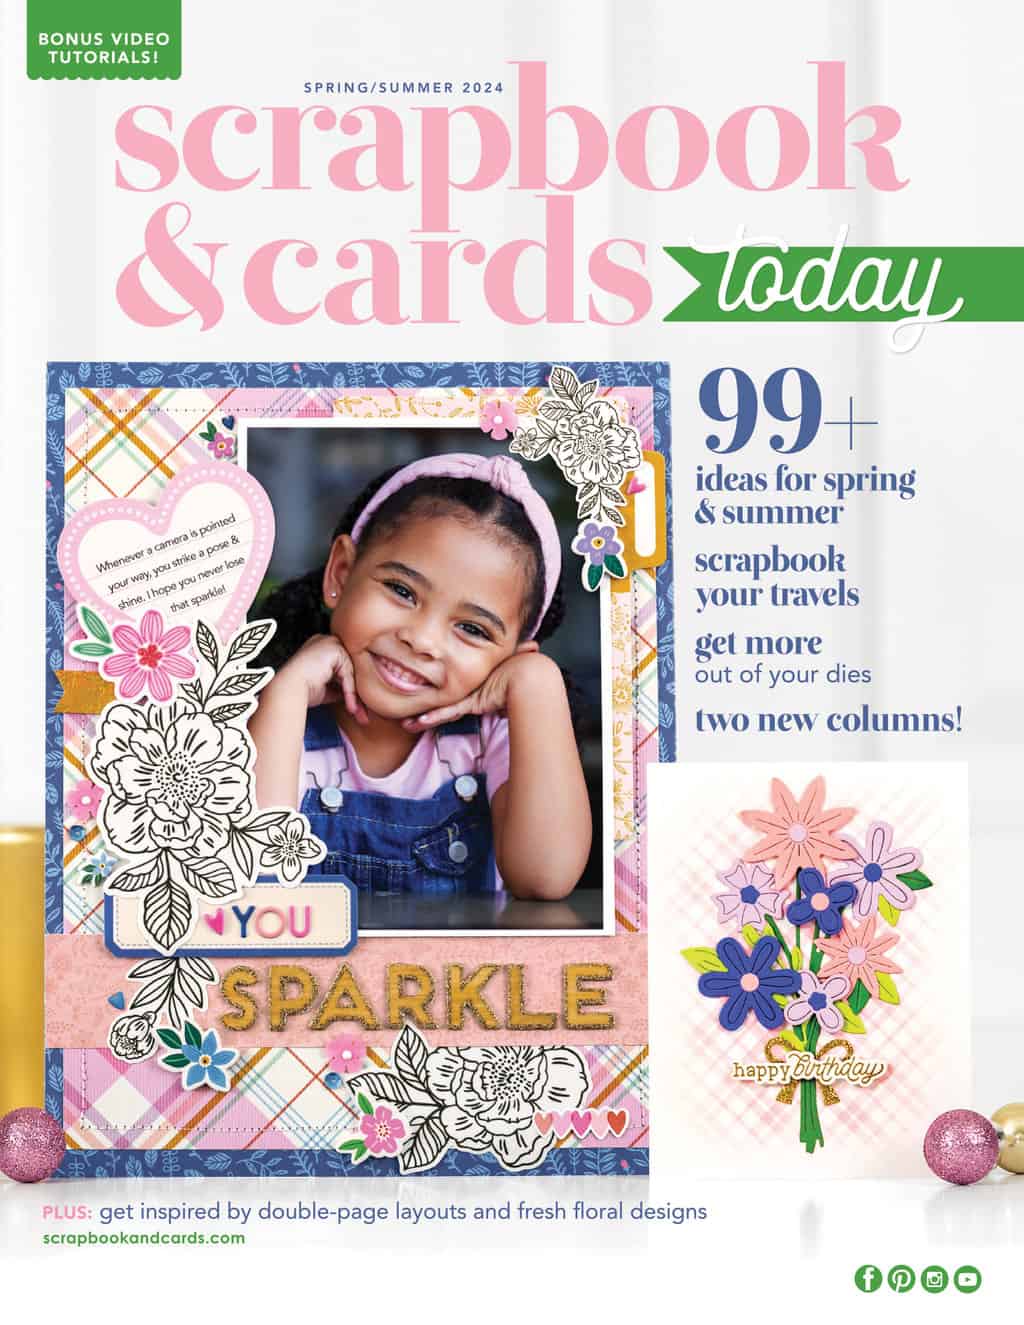 Spring/Summer 2024 - Scrapbook & Cards Today magazine